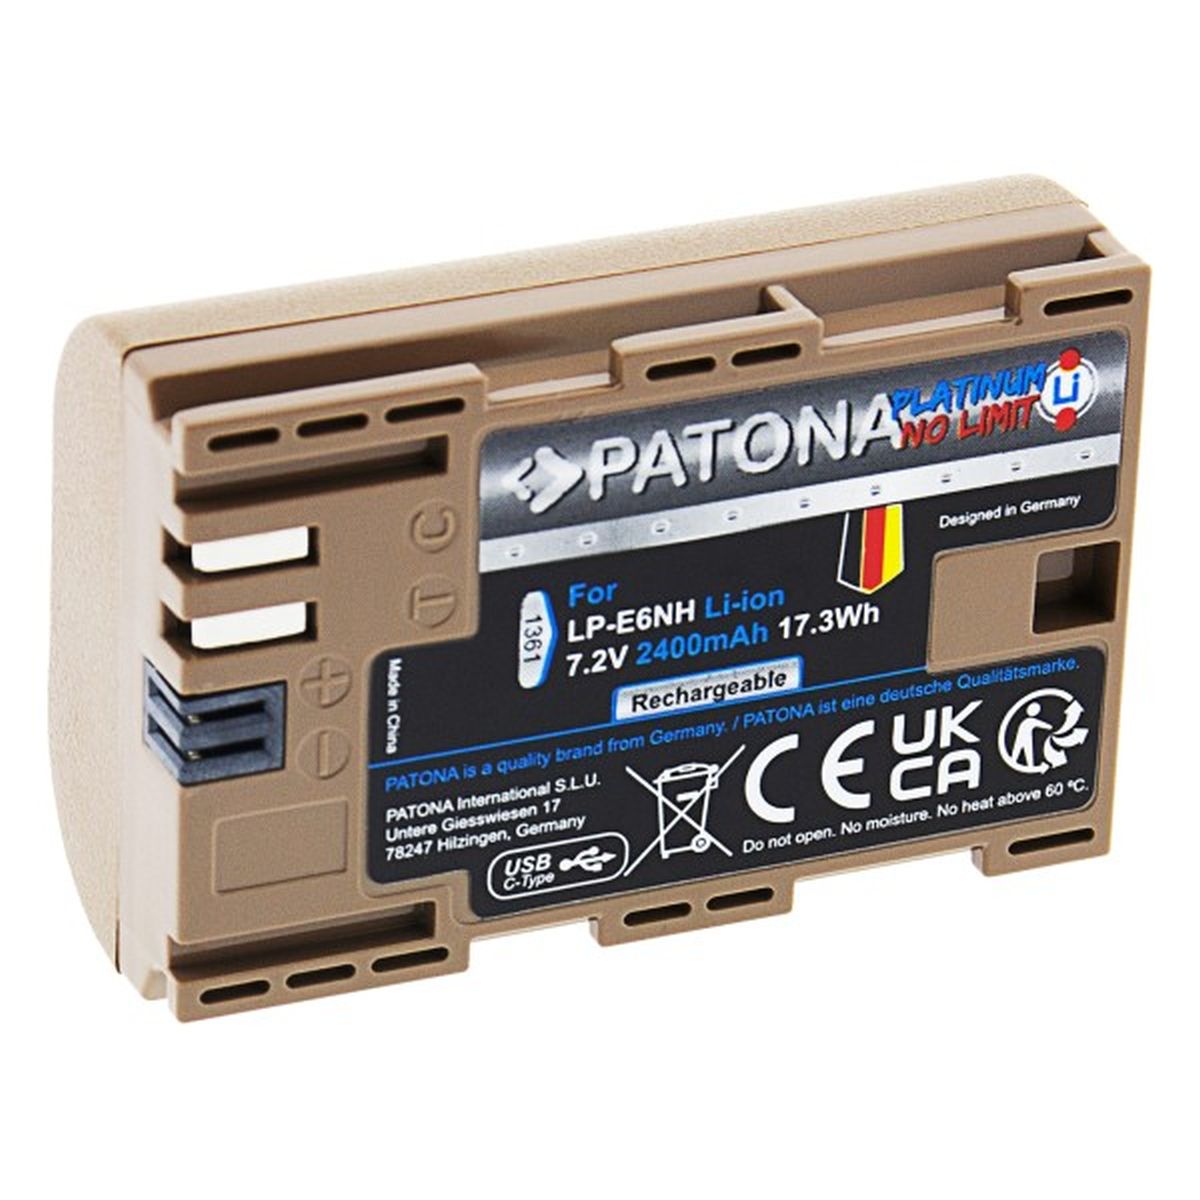 Patona Platinum Akku mit USB-C Input für Canon EOS R5, EOS R6, R6II, R7 und LP-E6NH